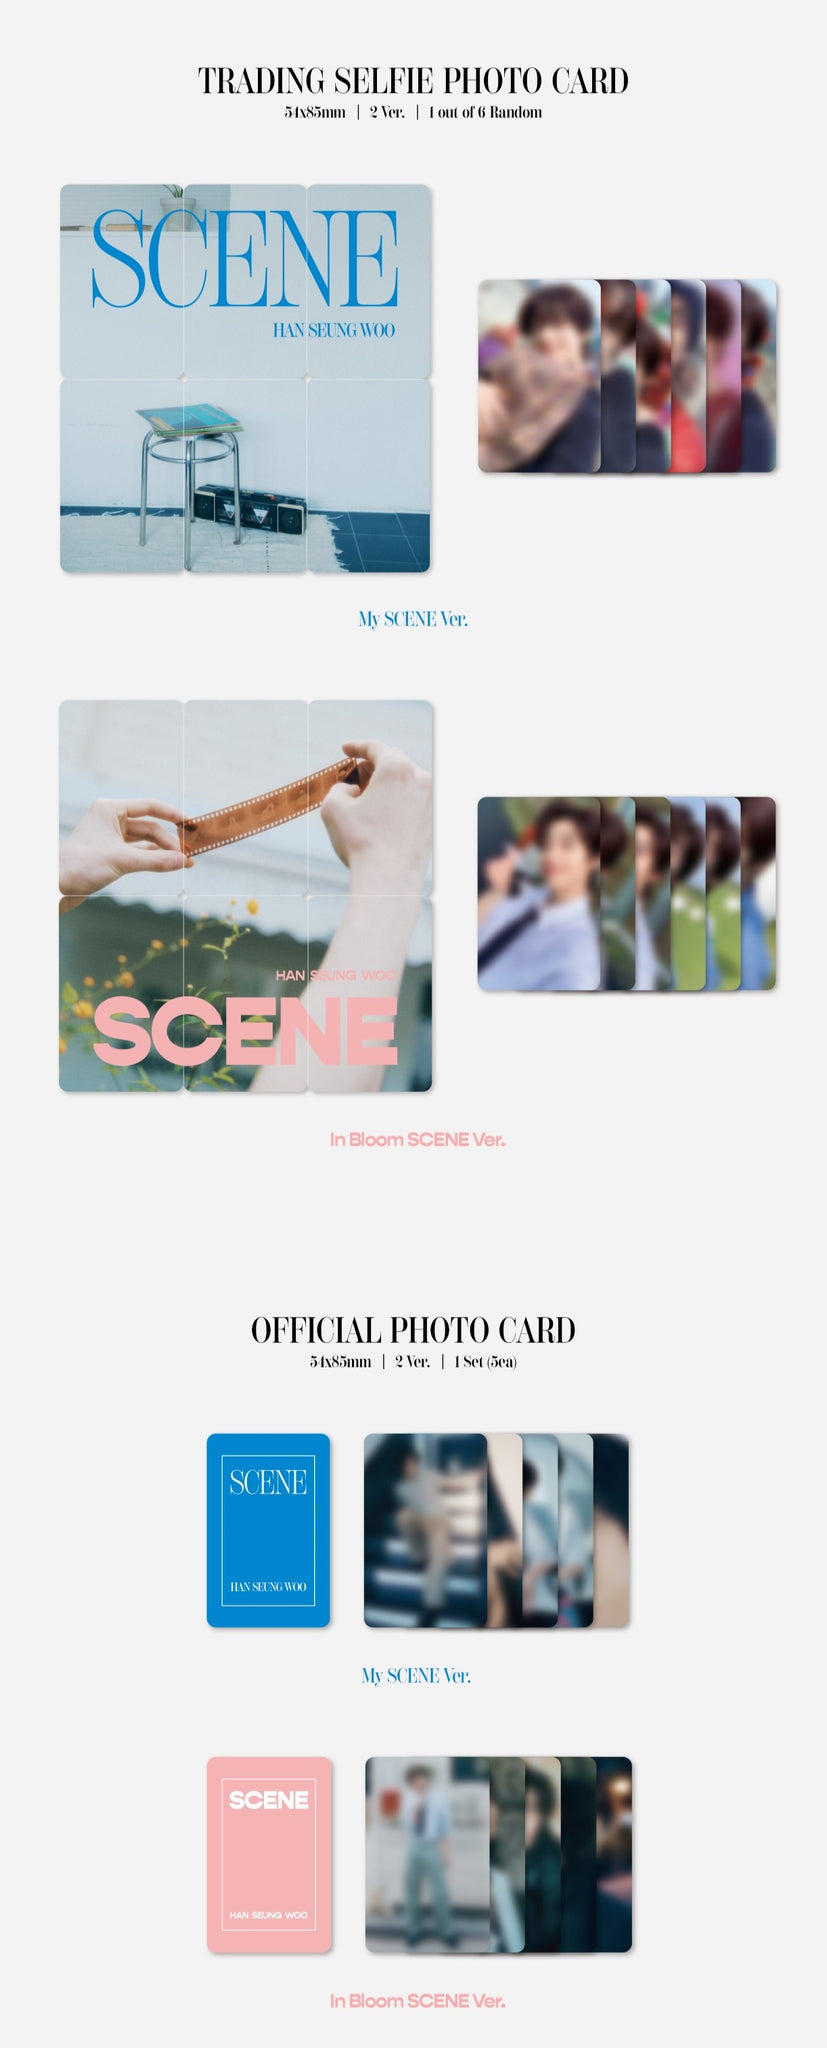 Han Seung Woo 1st Single Album SCENE - Platform Version Inclusions: Trading Selfie Photocard, Official Photocard Set